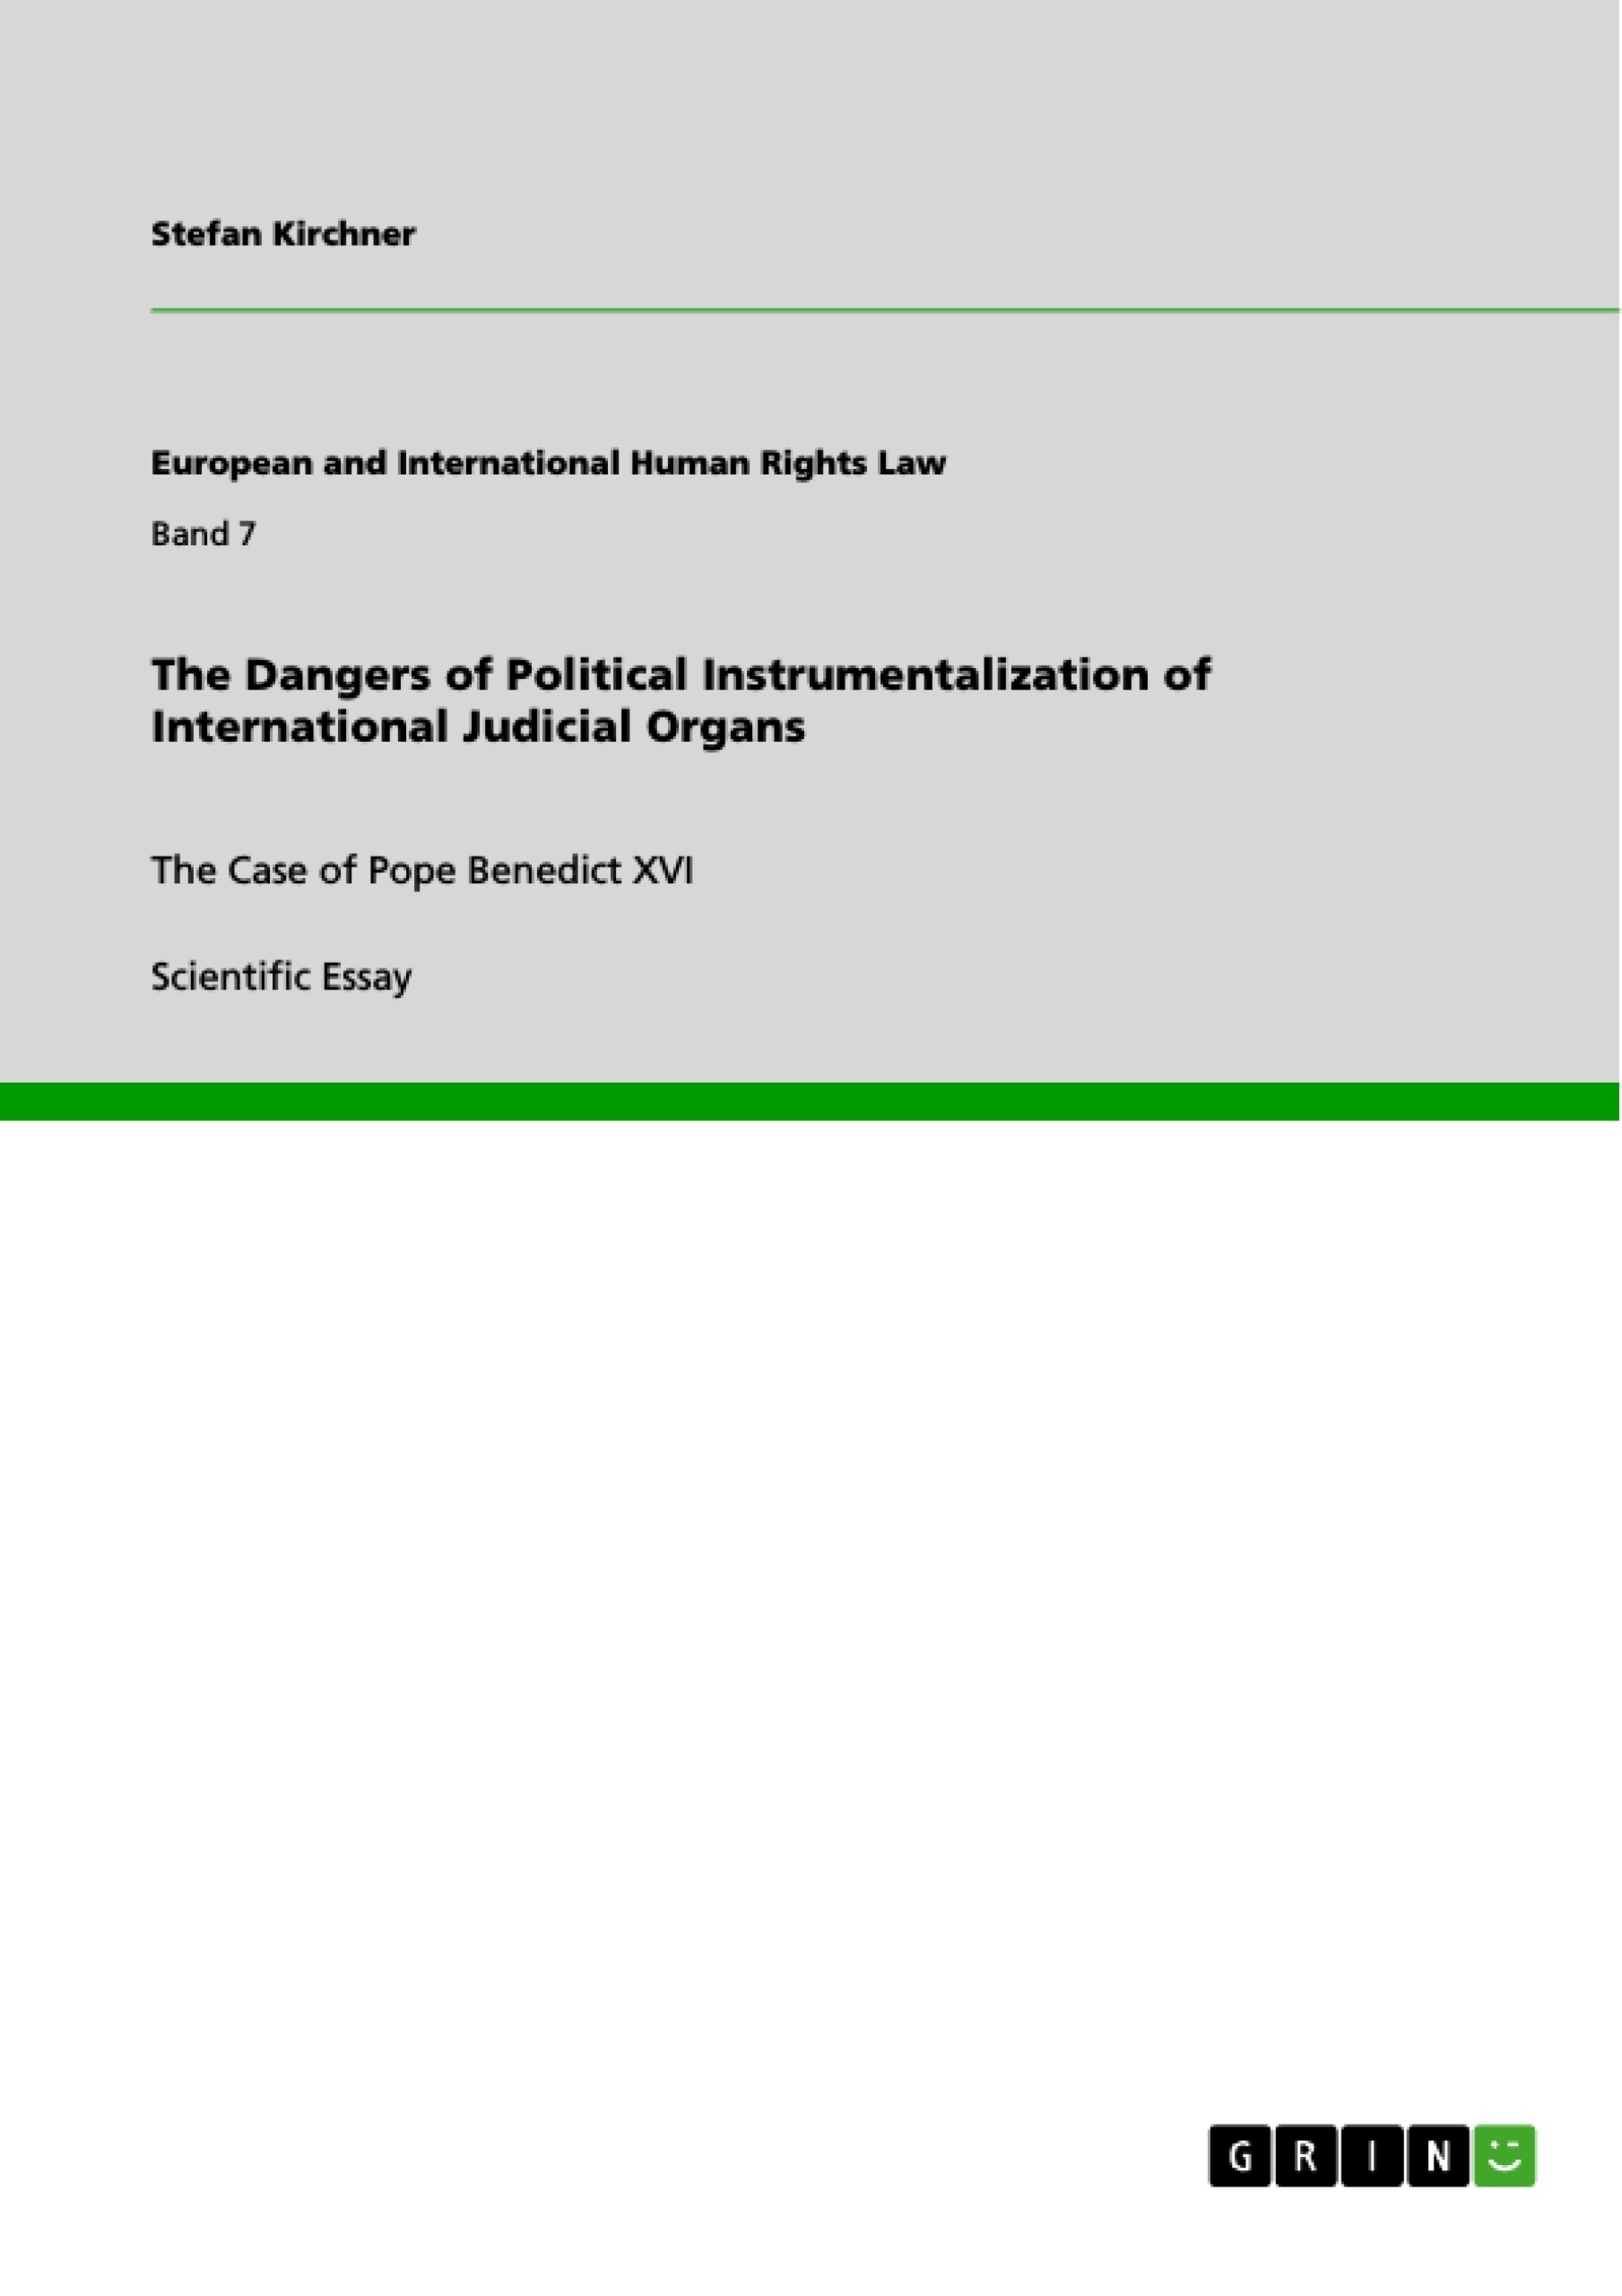 Title: The Dangers of Political Instrumentalization of International Judicial Organs 